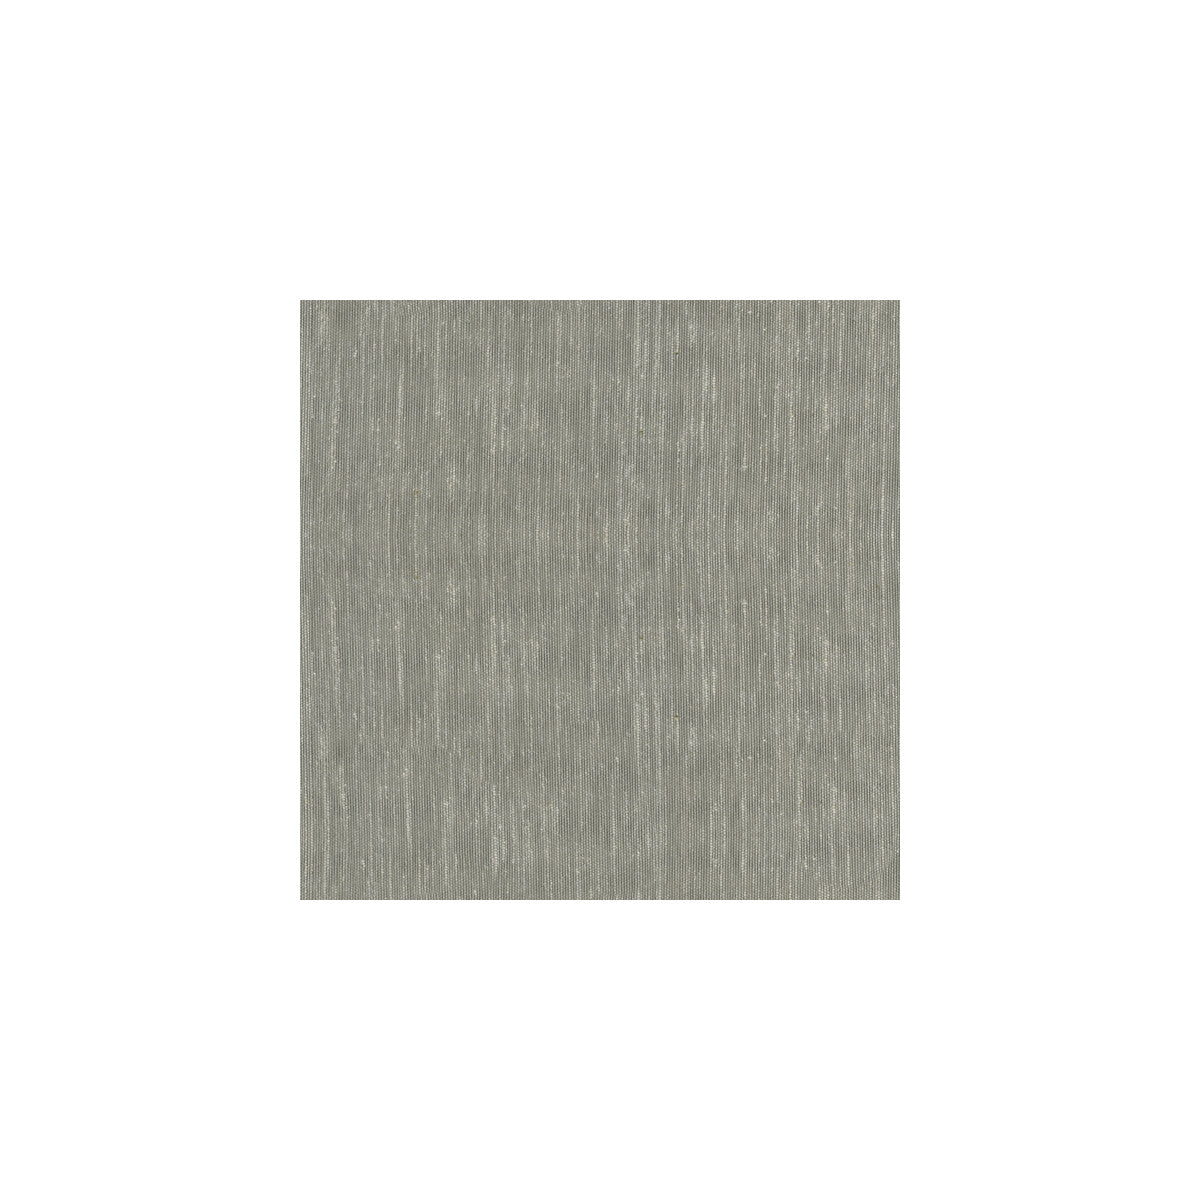 Kravet Basics fabric in 3691-11 color - pattern 3691.11.0 - by Kravet Basics in the Gis collection